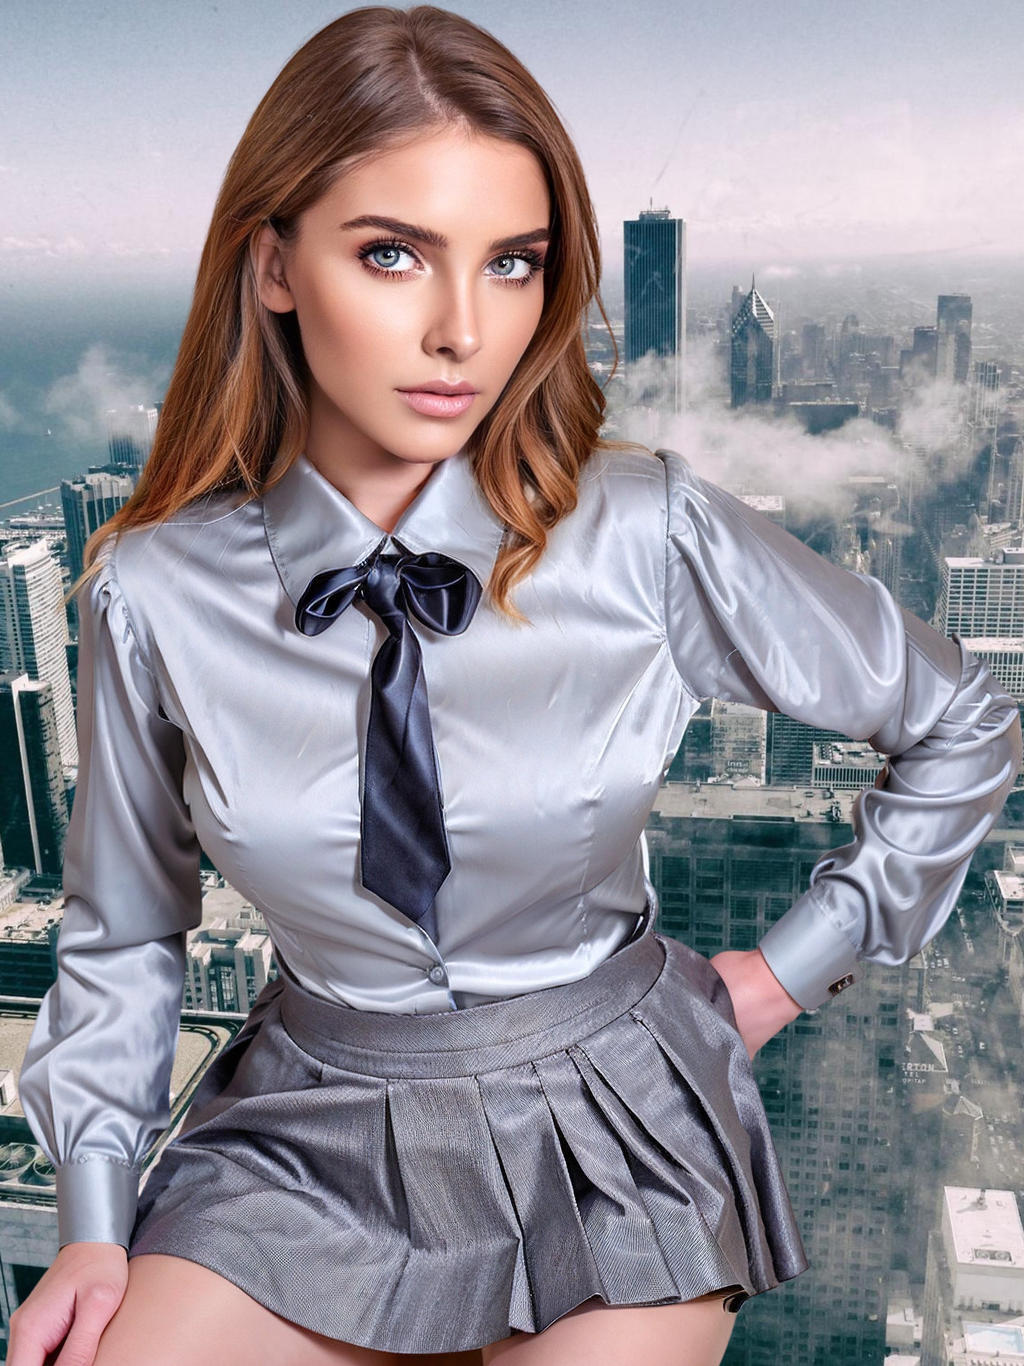 Grey satin shirt and pleated skirt by satinshirt on DeviantArt